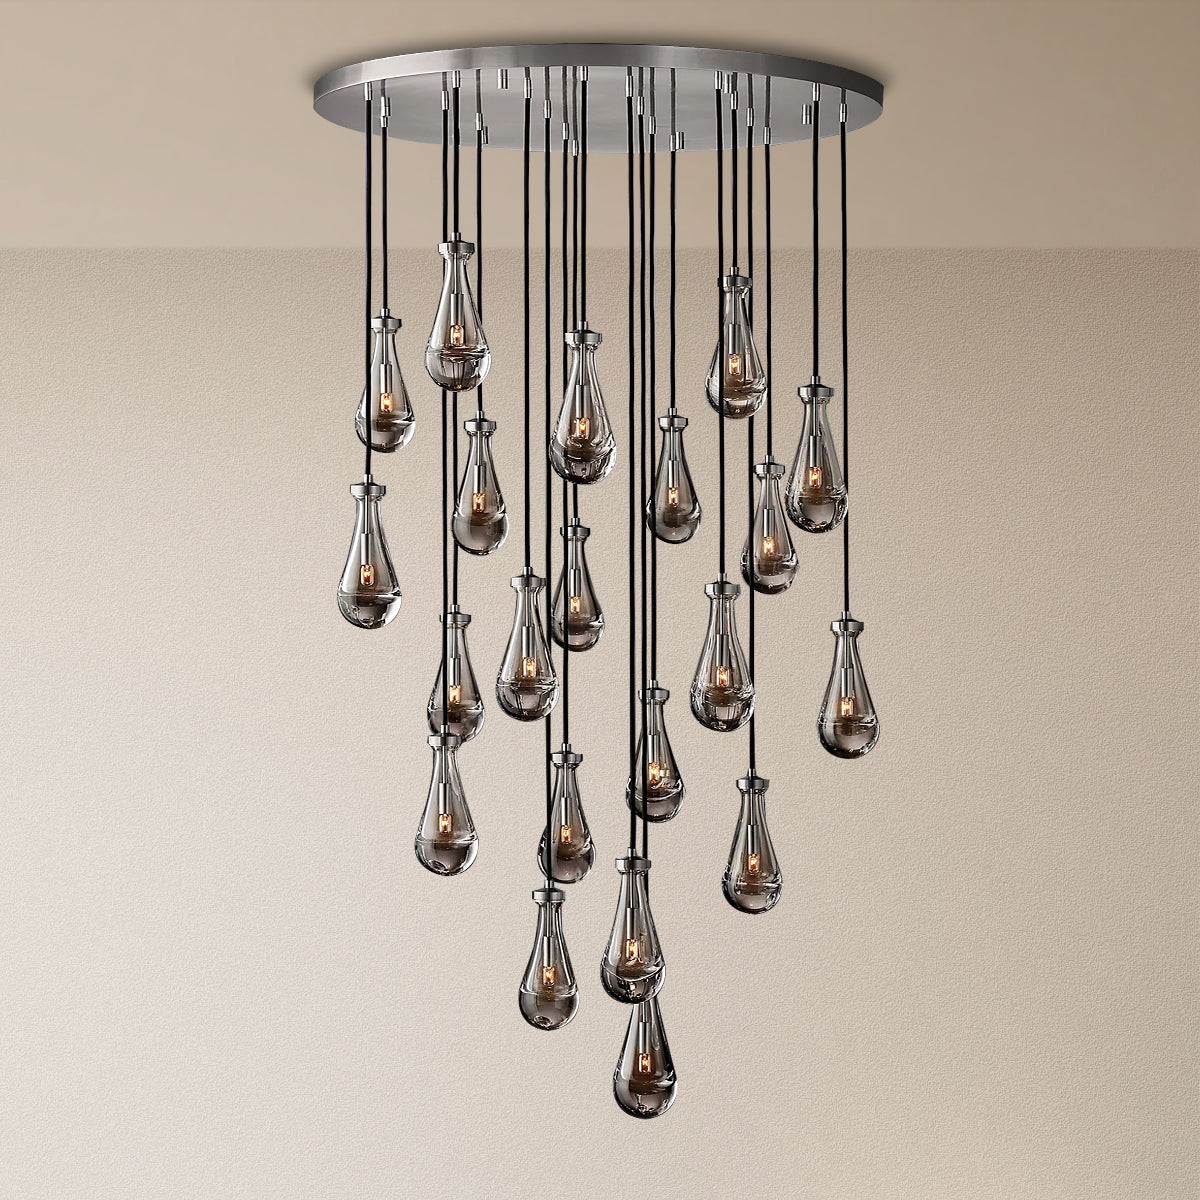 Modern Raindrop Chandelier Round / Rectangle For Living Room Dinning Room